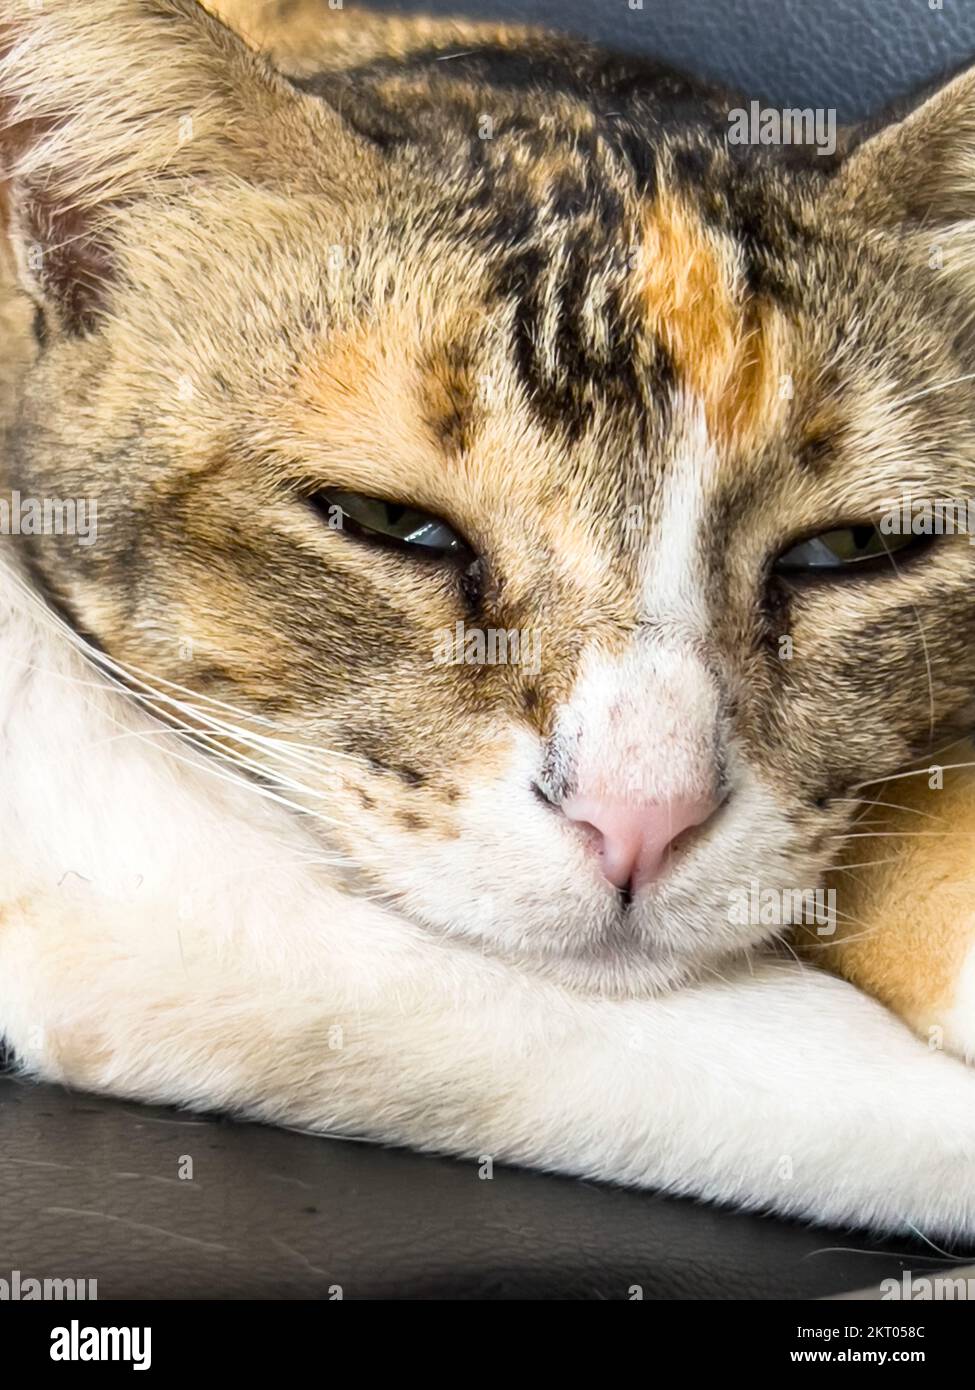 Close up of a sad looking face cat Stock Photo